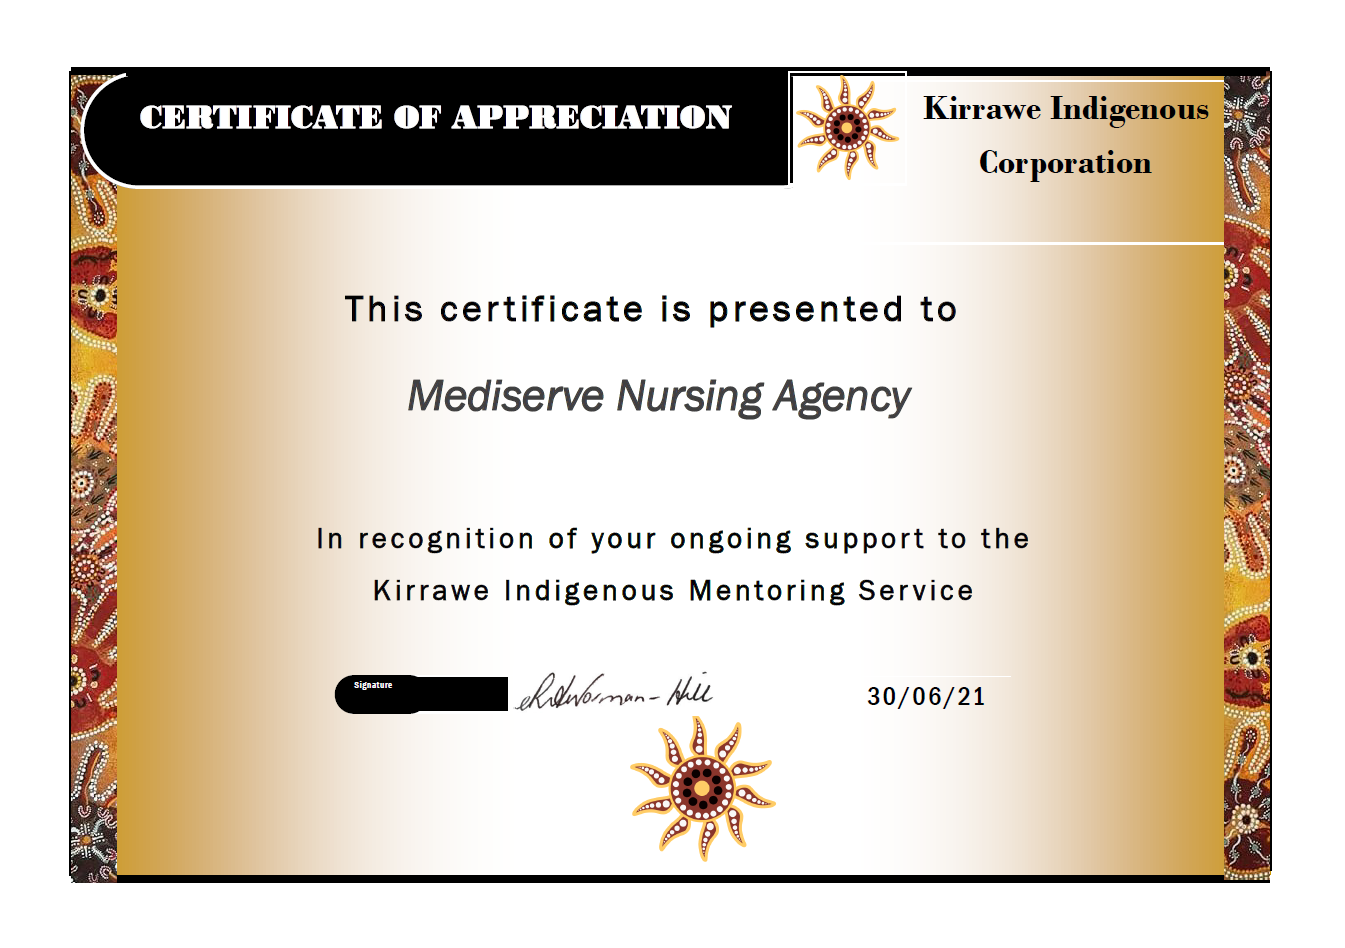 Kirrawe Indigeneous Corporation